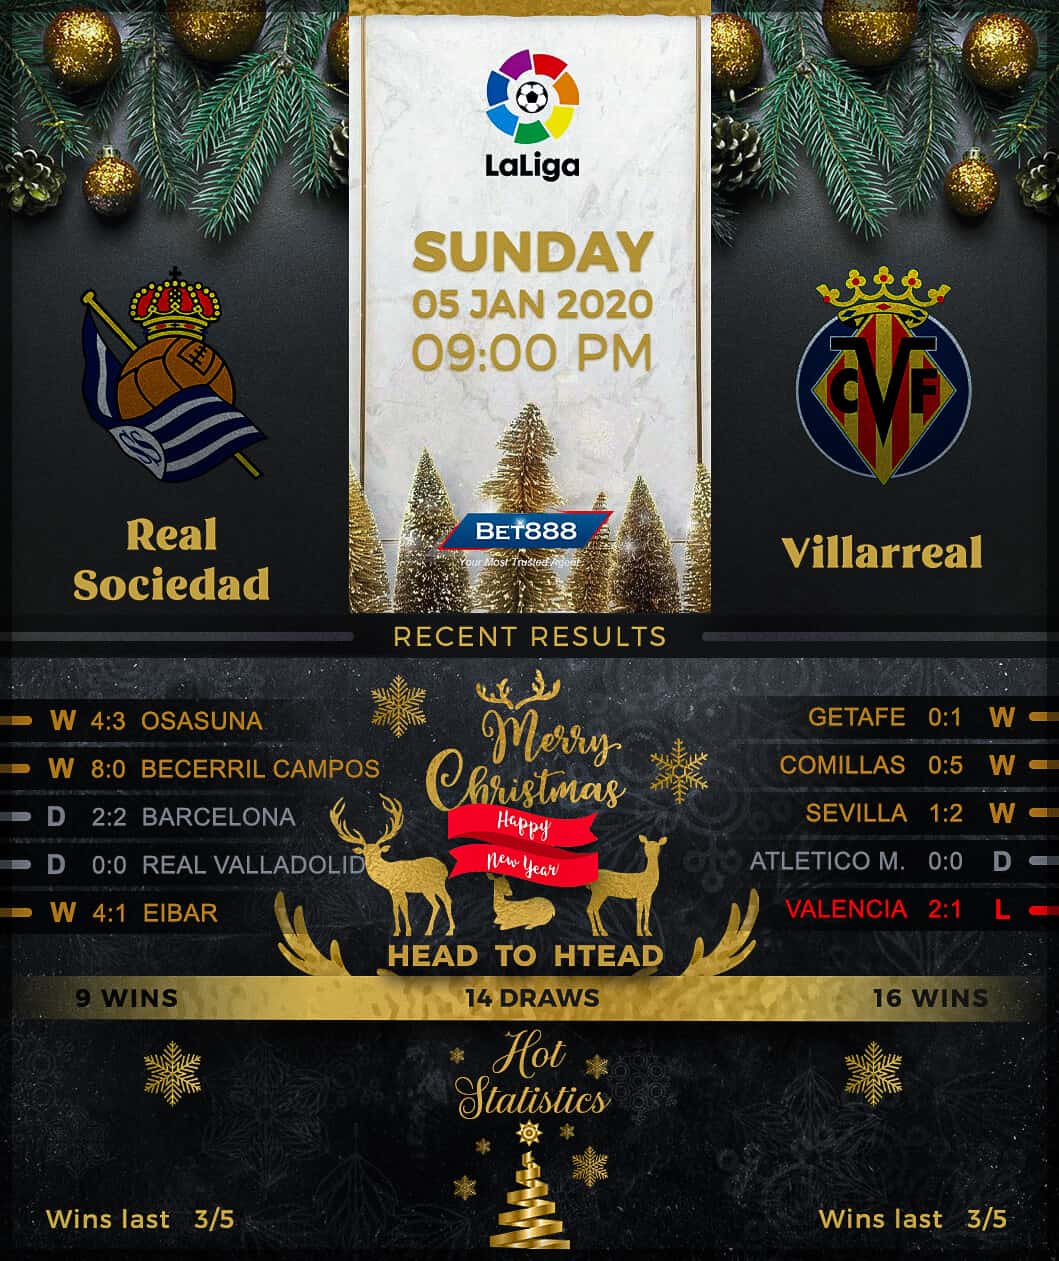 Real Sociedad vs Villarreal﻿ 05/01/20